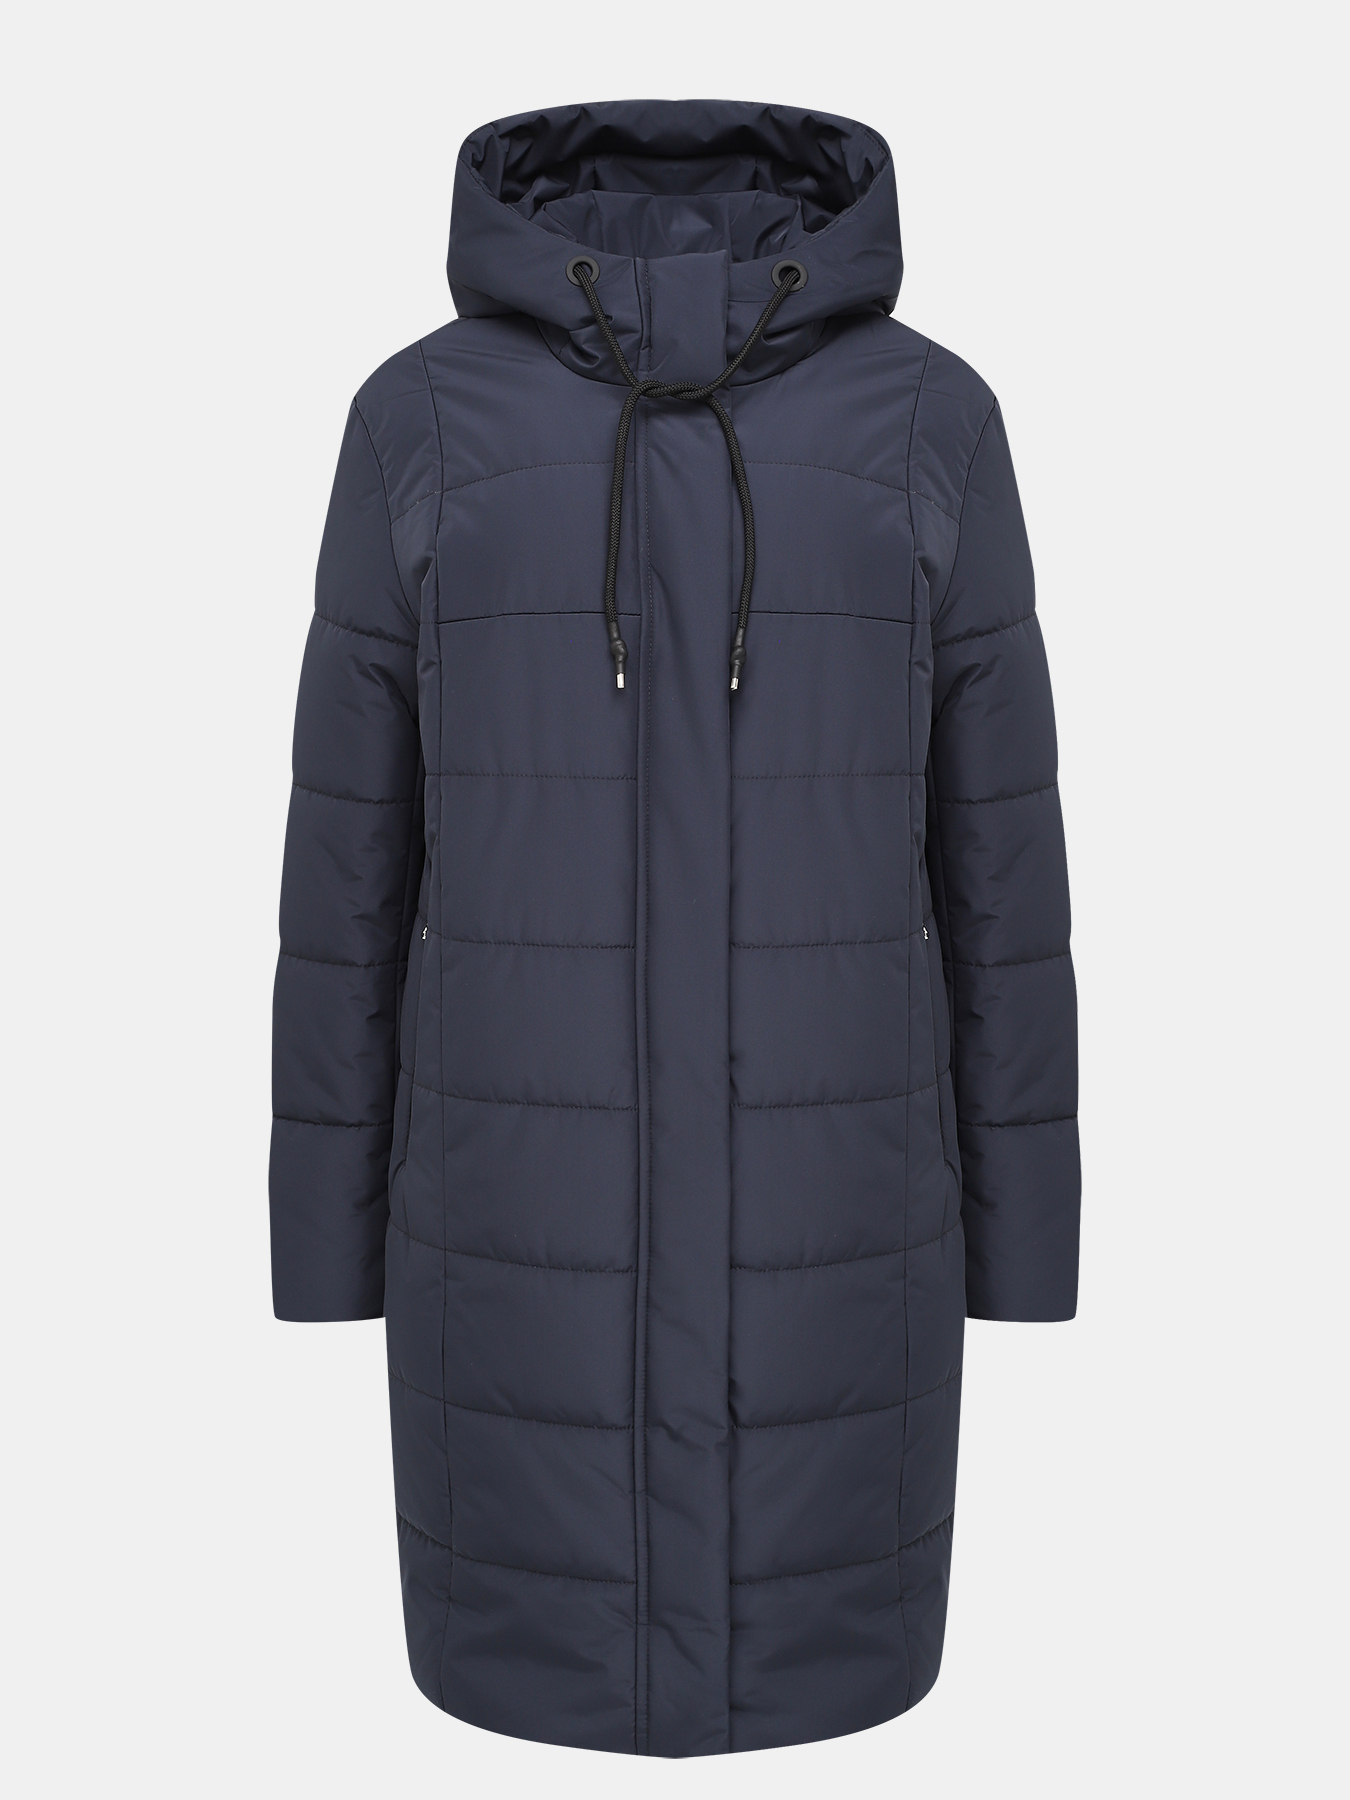 Пальто зимнее Maritta 433548-026, цвет темно-синий, размер 50